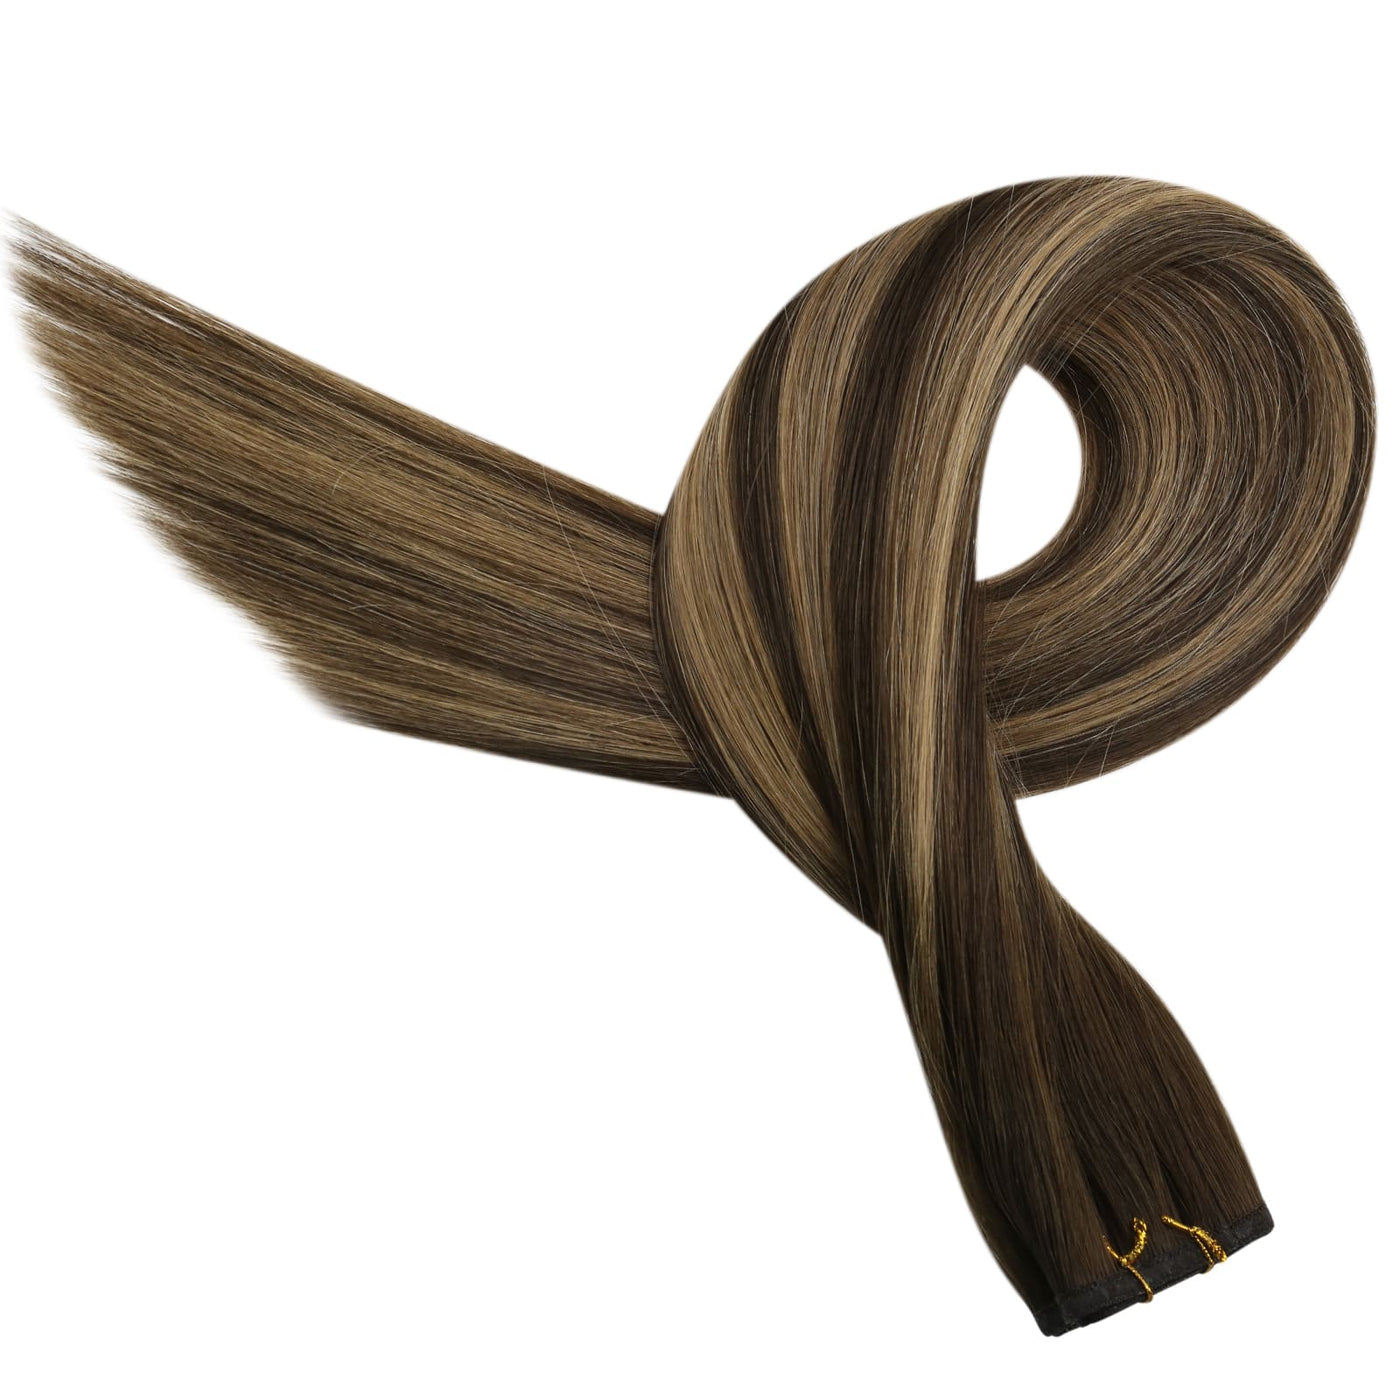 100 human hair extensions virgin weft hair